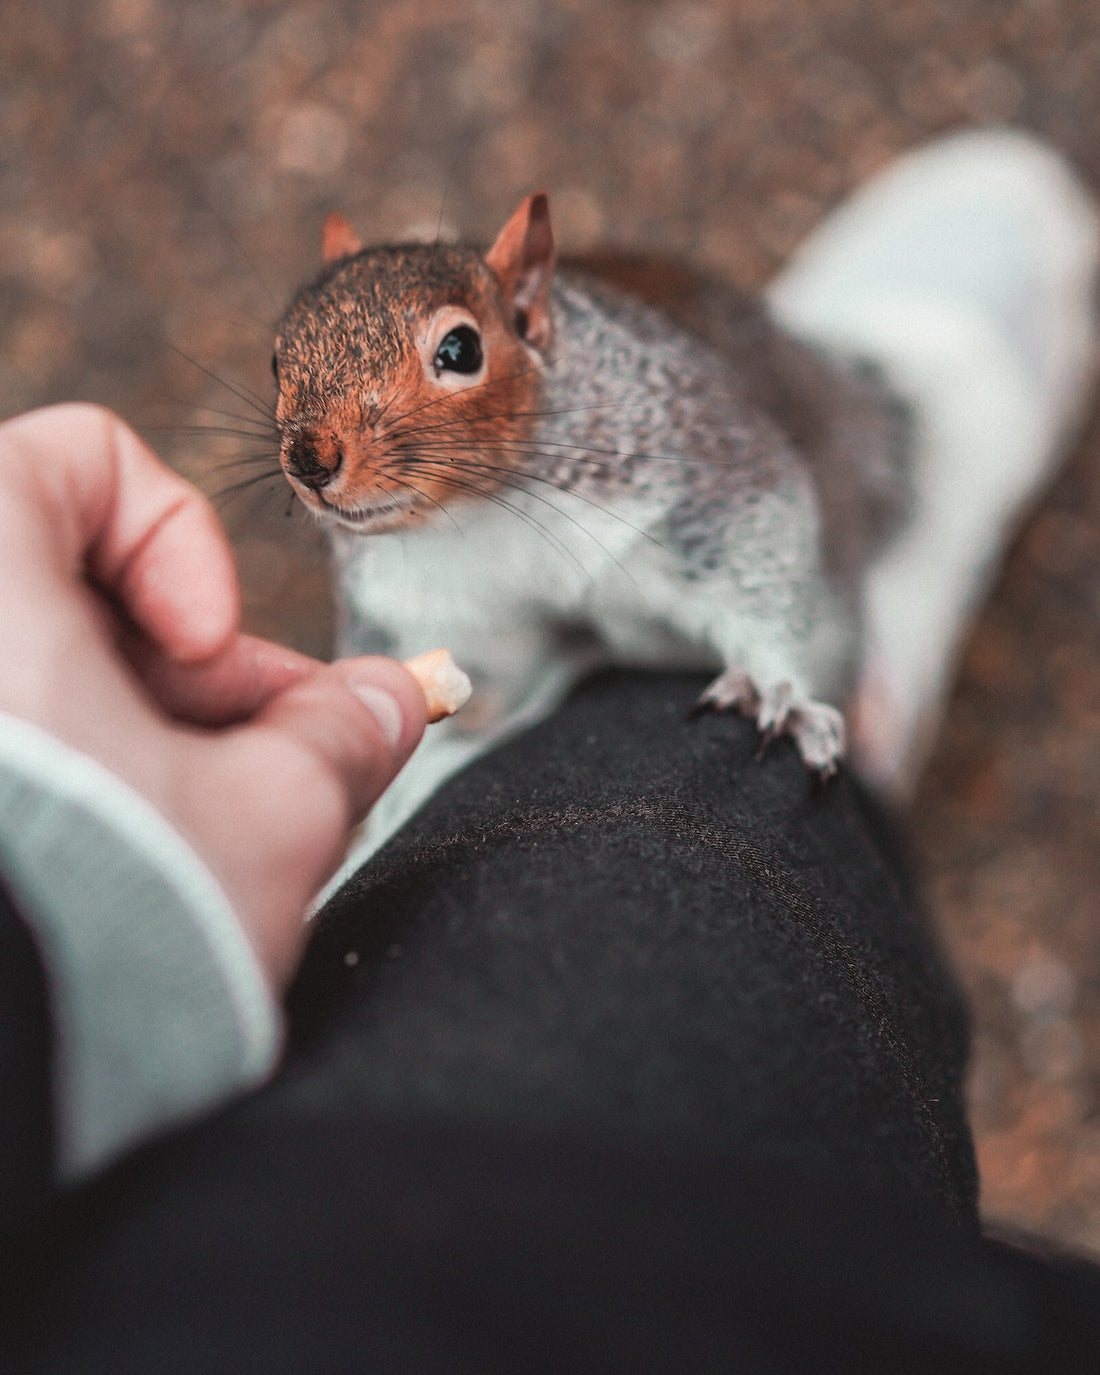 Can Squirrels Eat Walnuts?